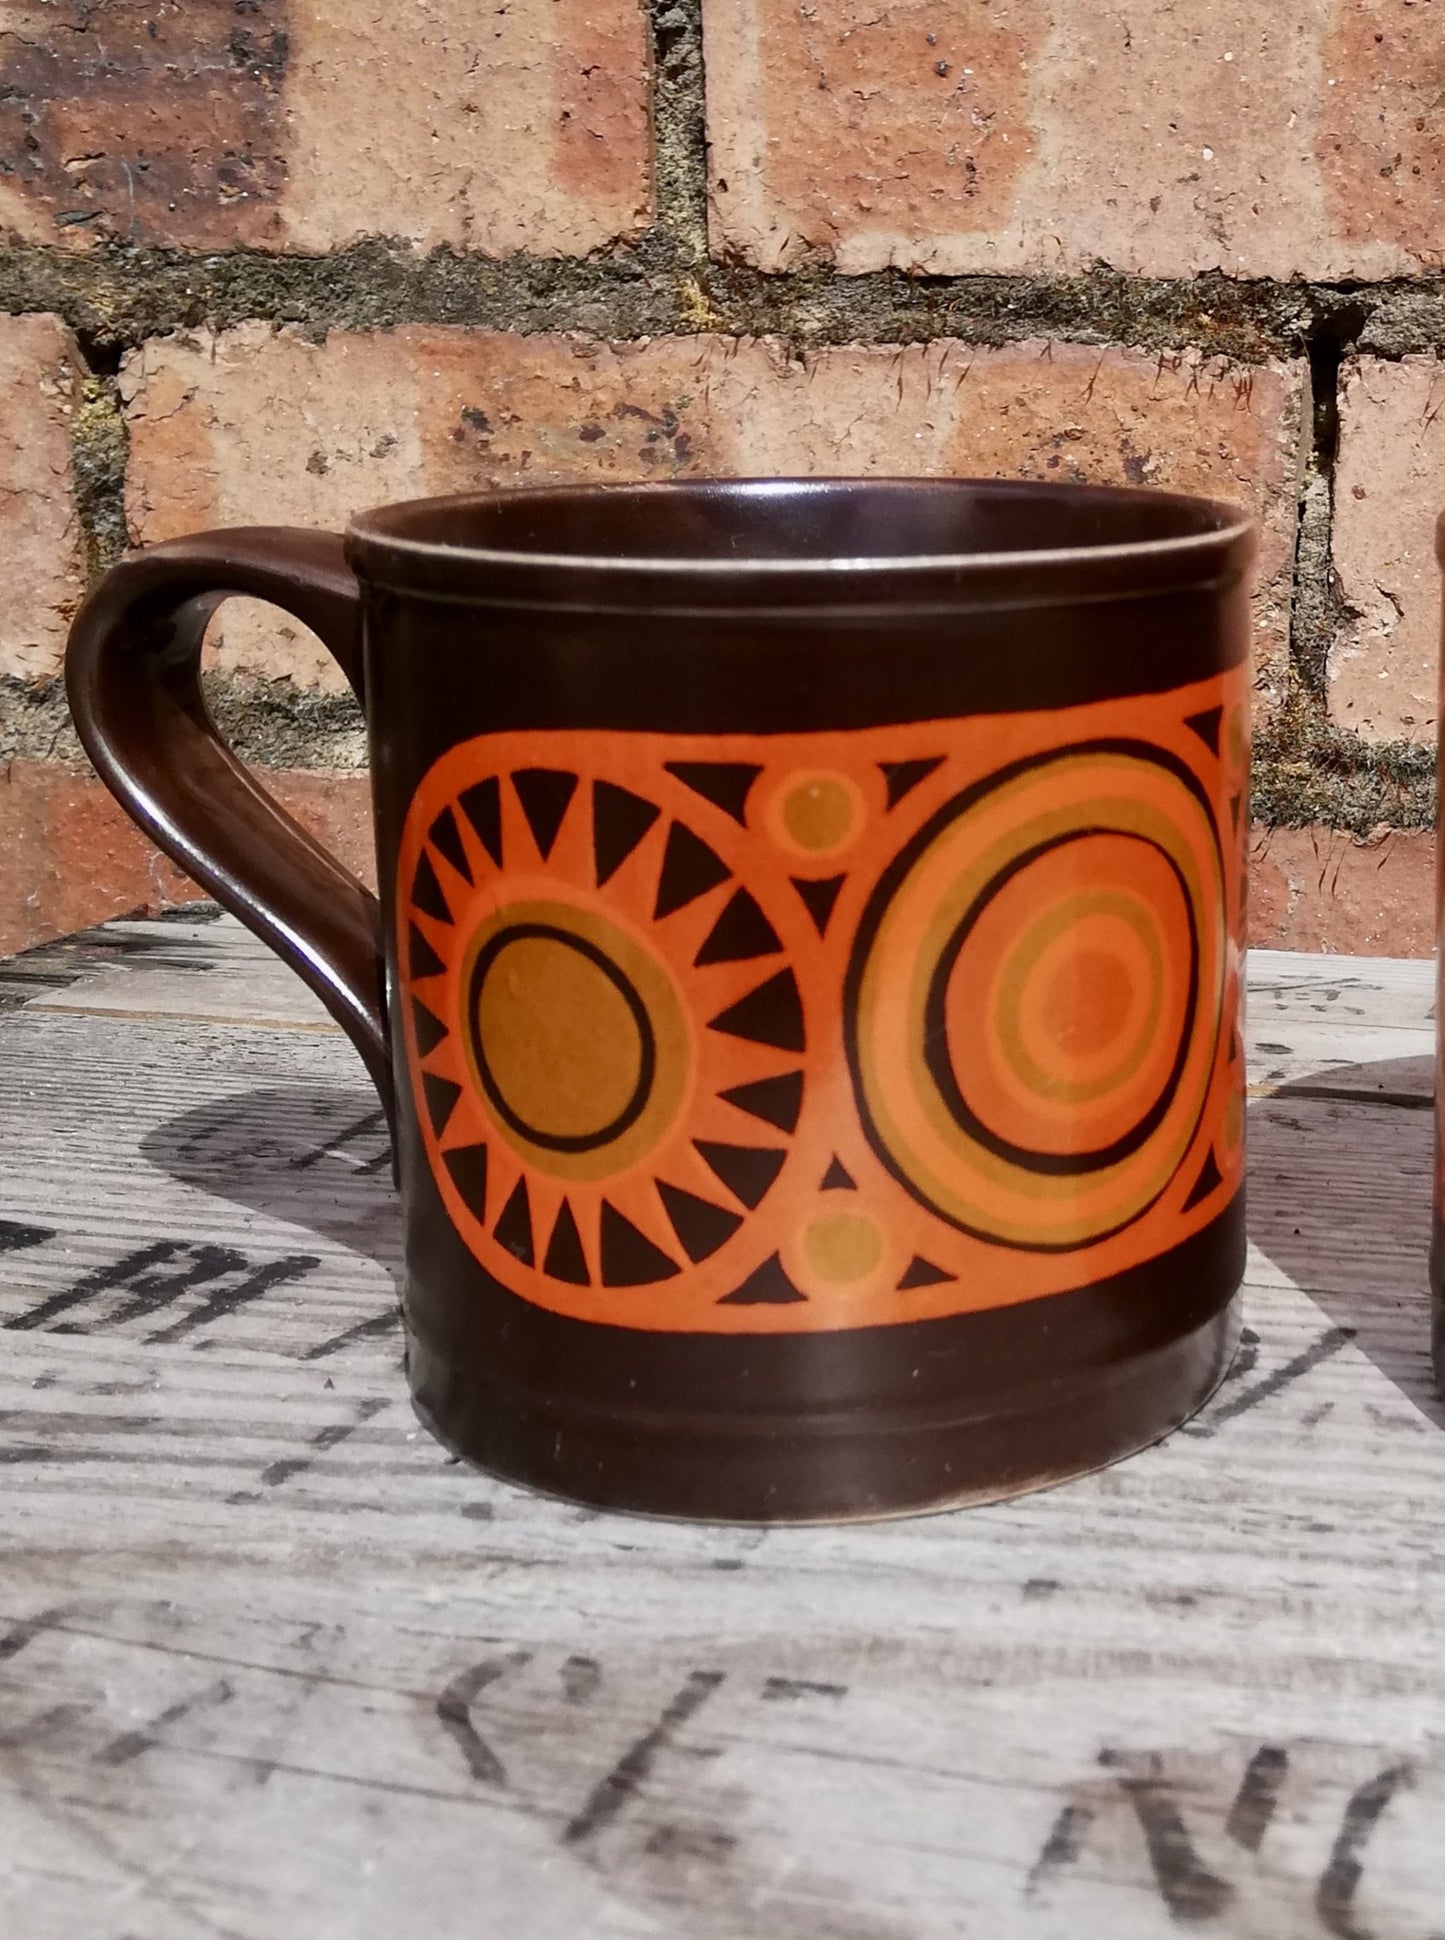 Retro vintage 1960's mug in brown and orange